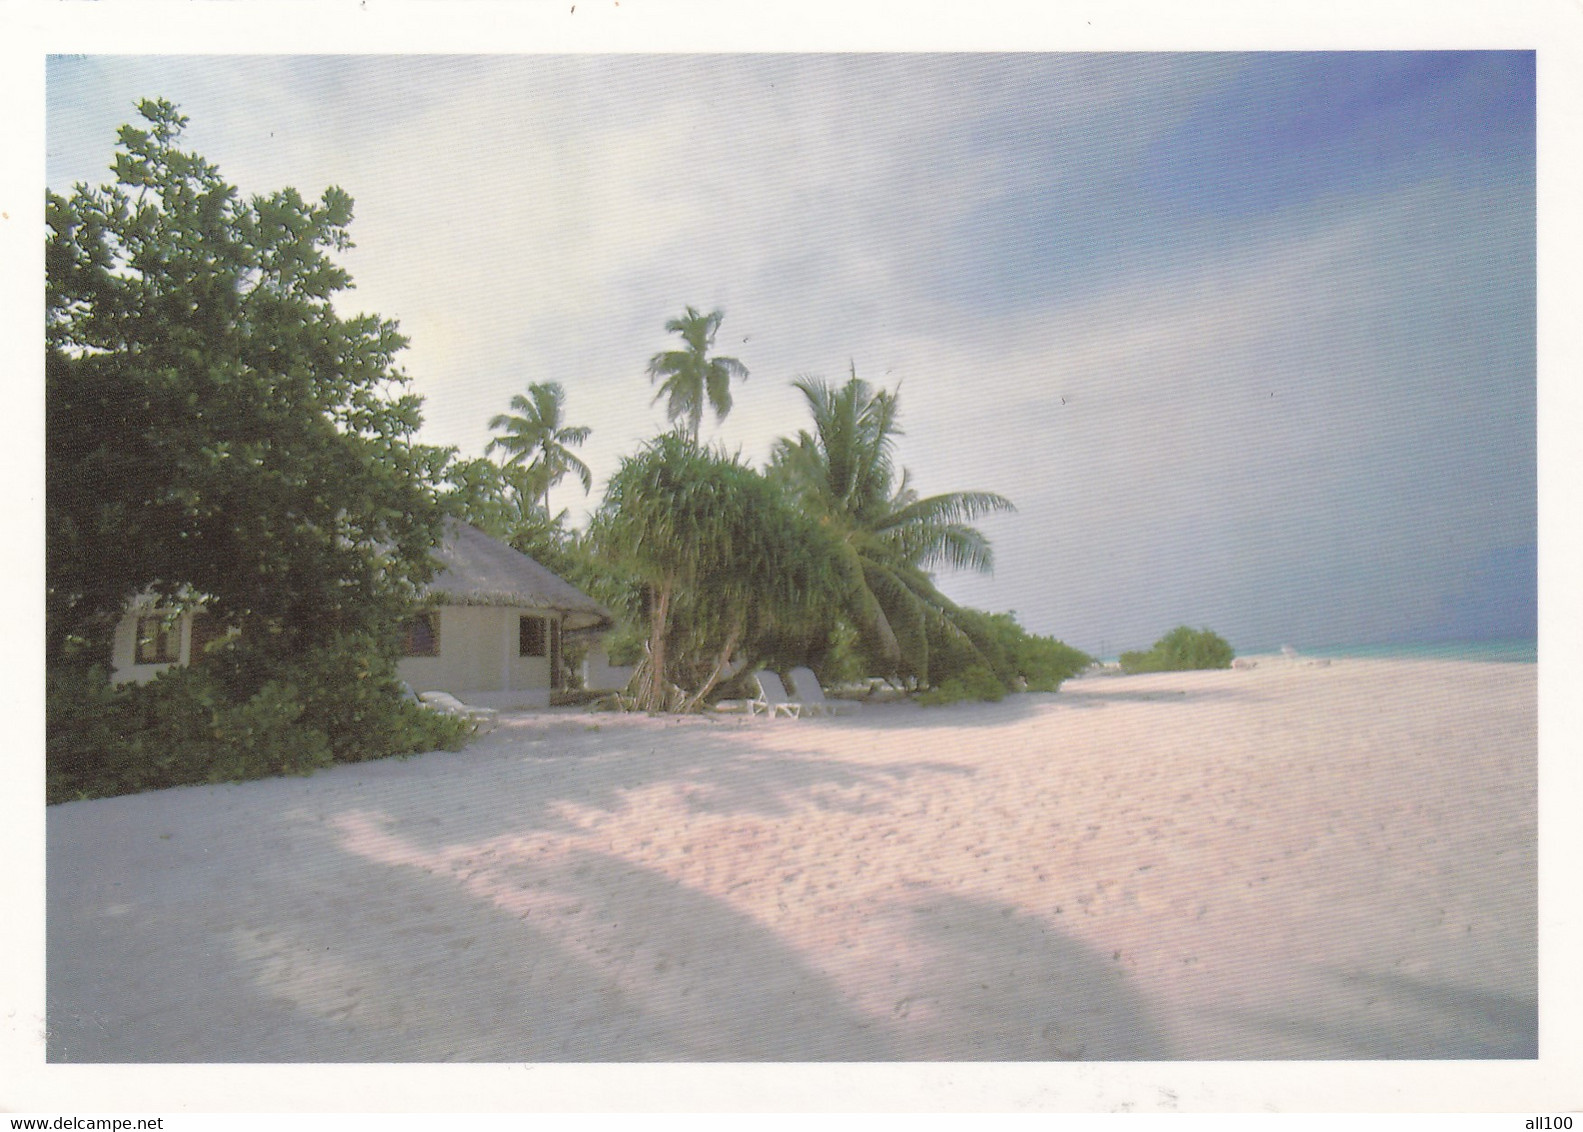 A20579 - MALDIVES VELAVARU ISLAND POST CARD USED STAMP MALDIVES ROSA MULTIFLORA SENT TO SWITZERLAND BEACH PALM TREES - Maldivas